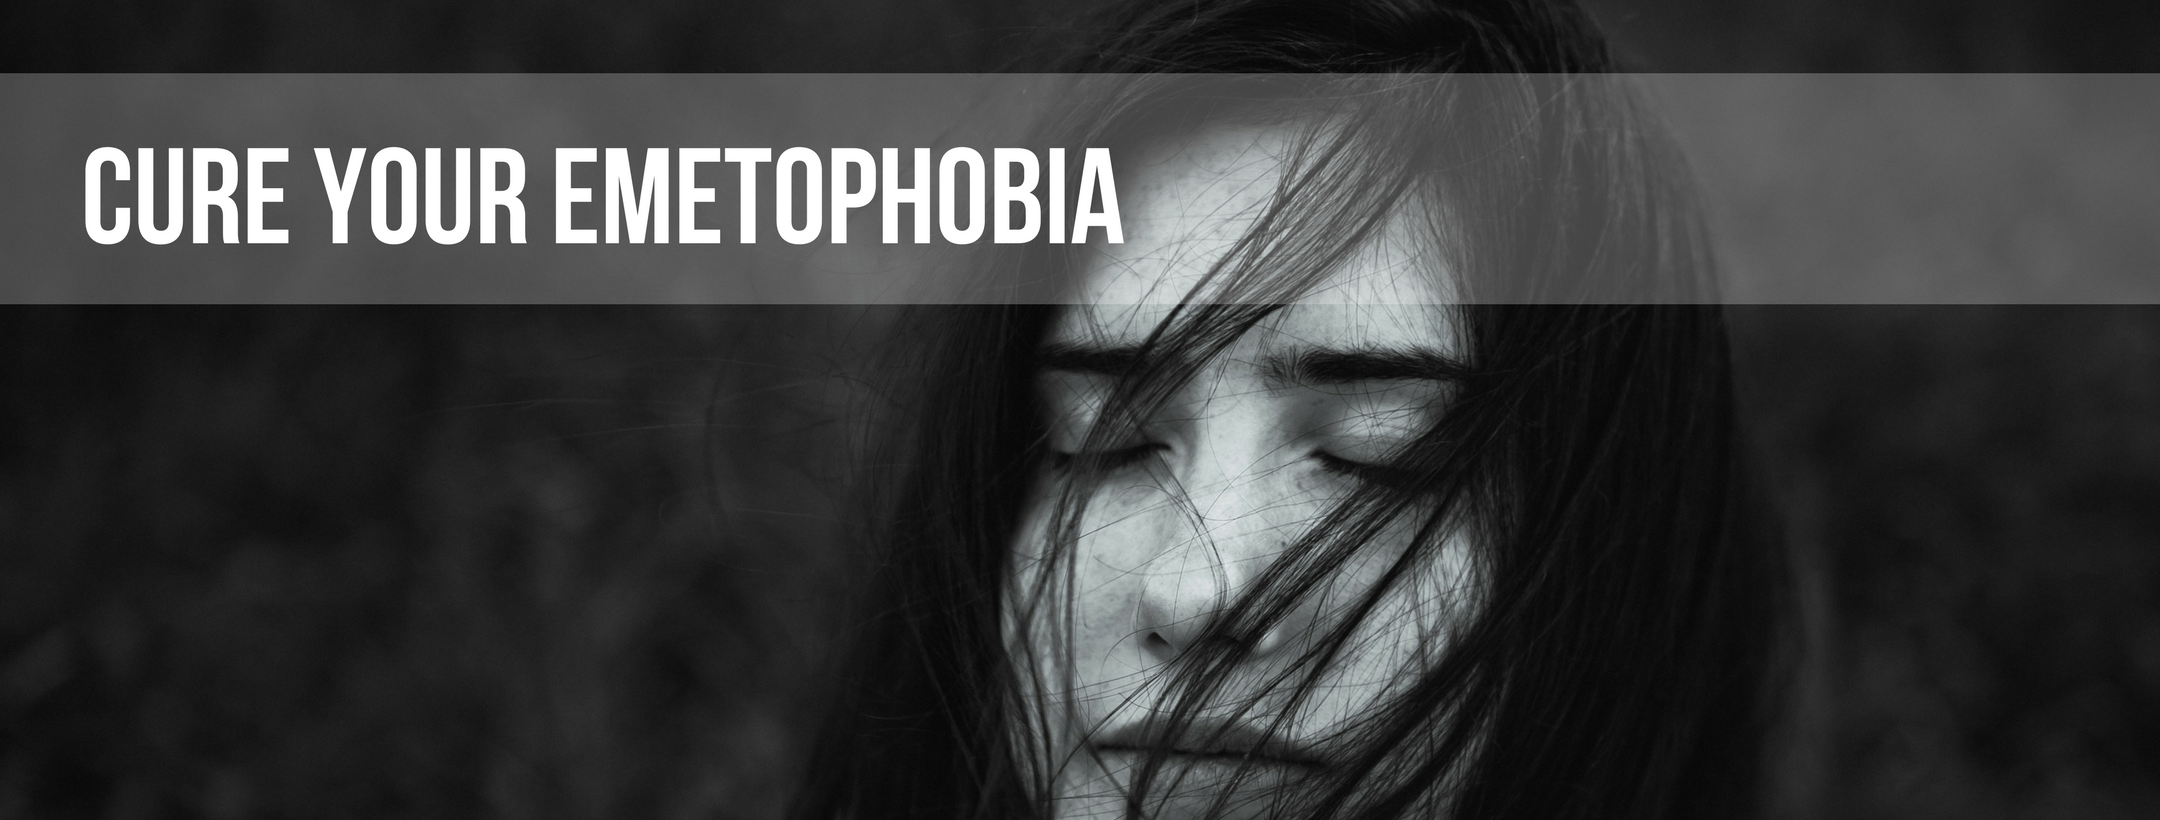 Emetophobia page_image 1.png